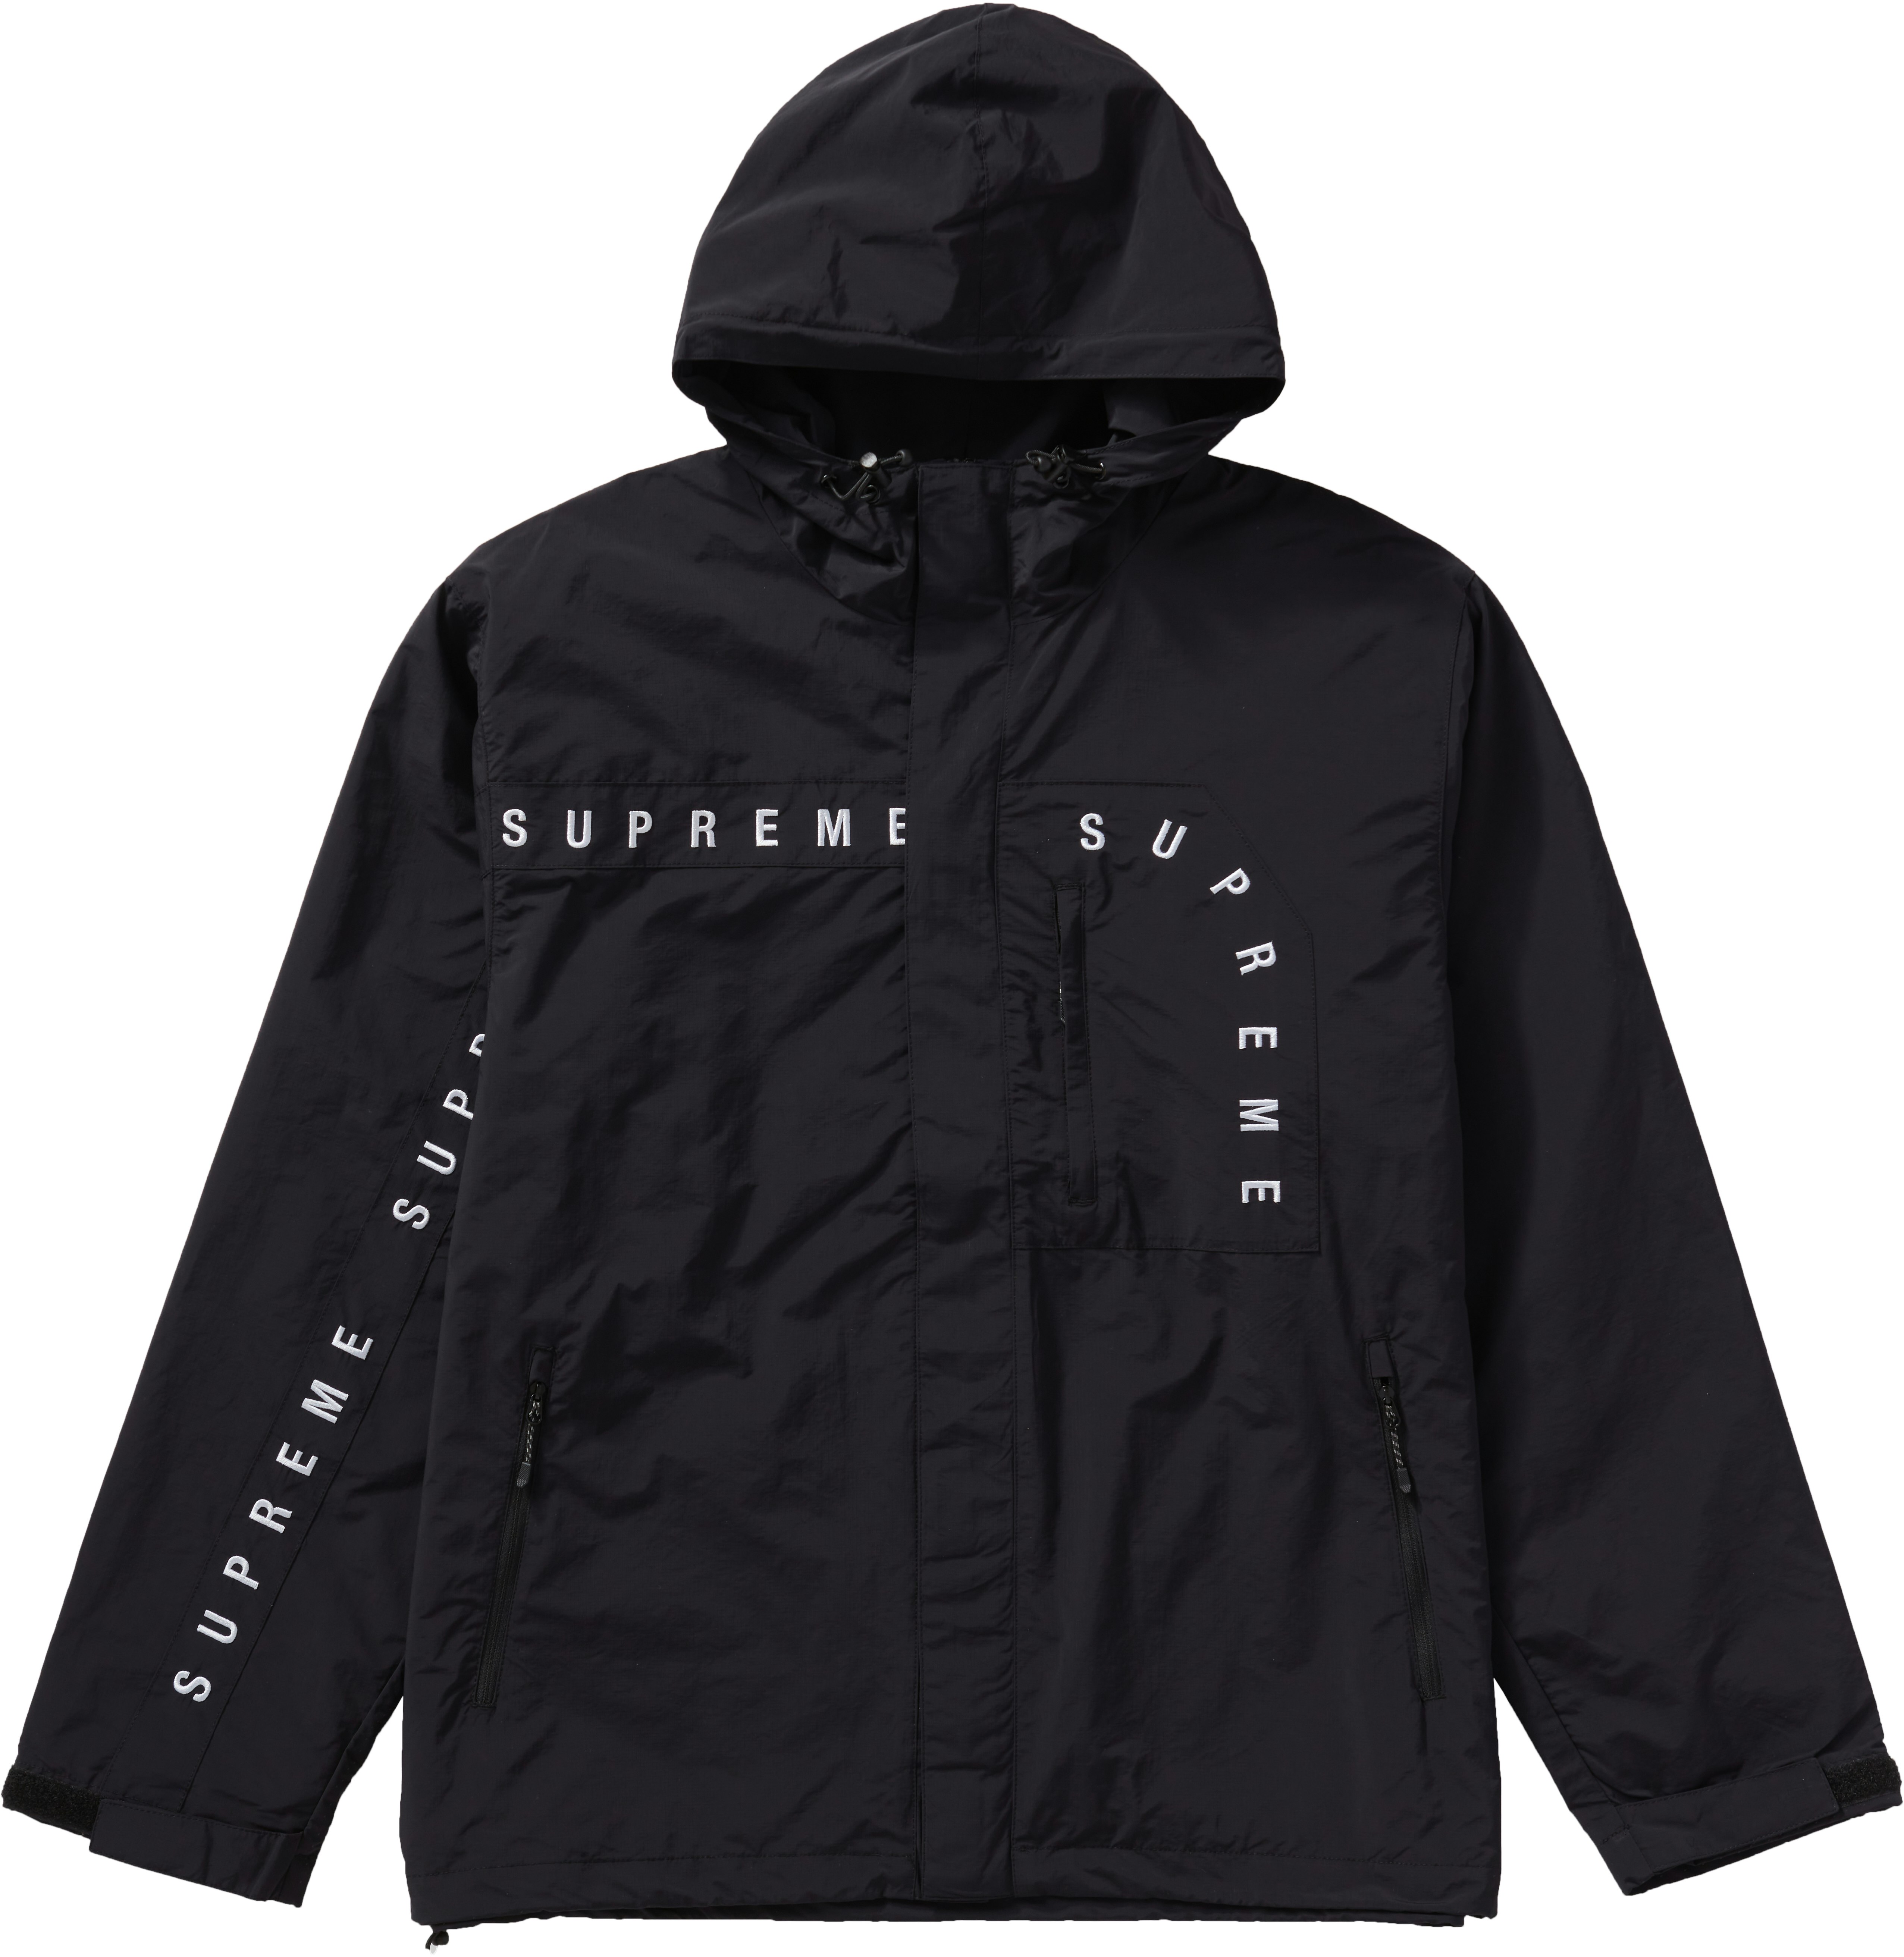 Supreme Curve Logos Ripstop Jacket Black - Novelship